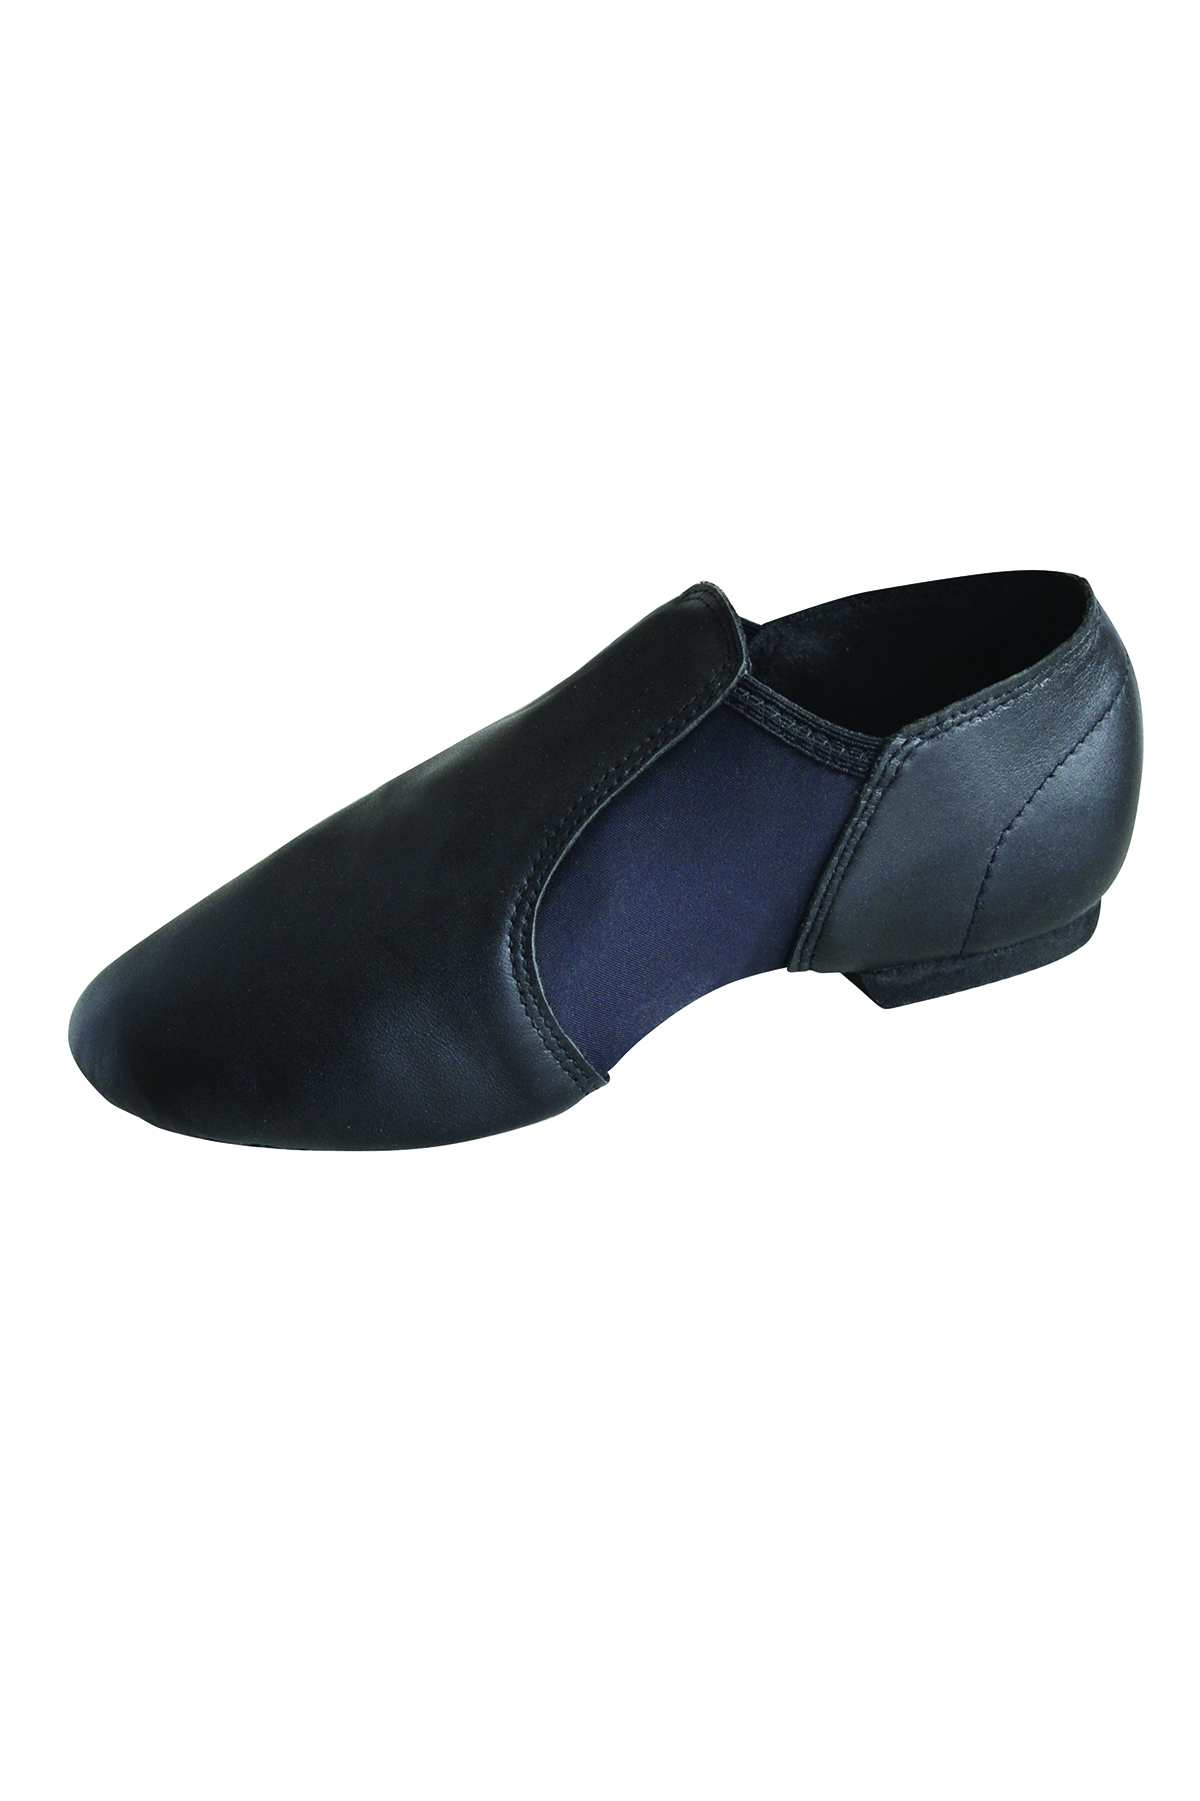 black slip on split sole jazz shoes